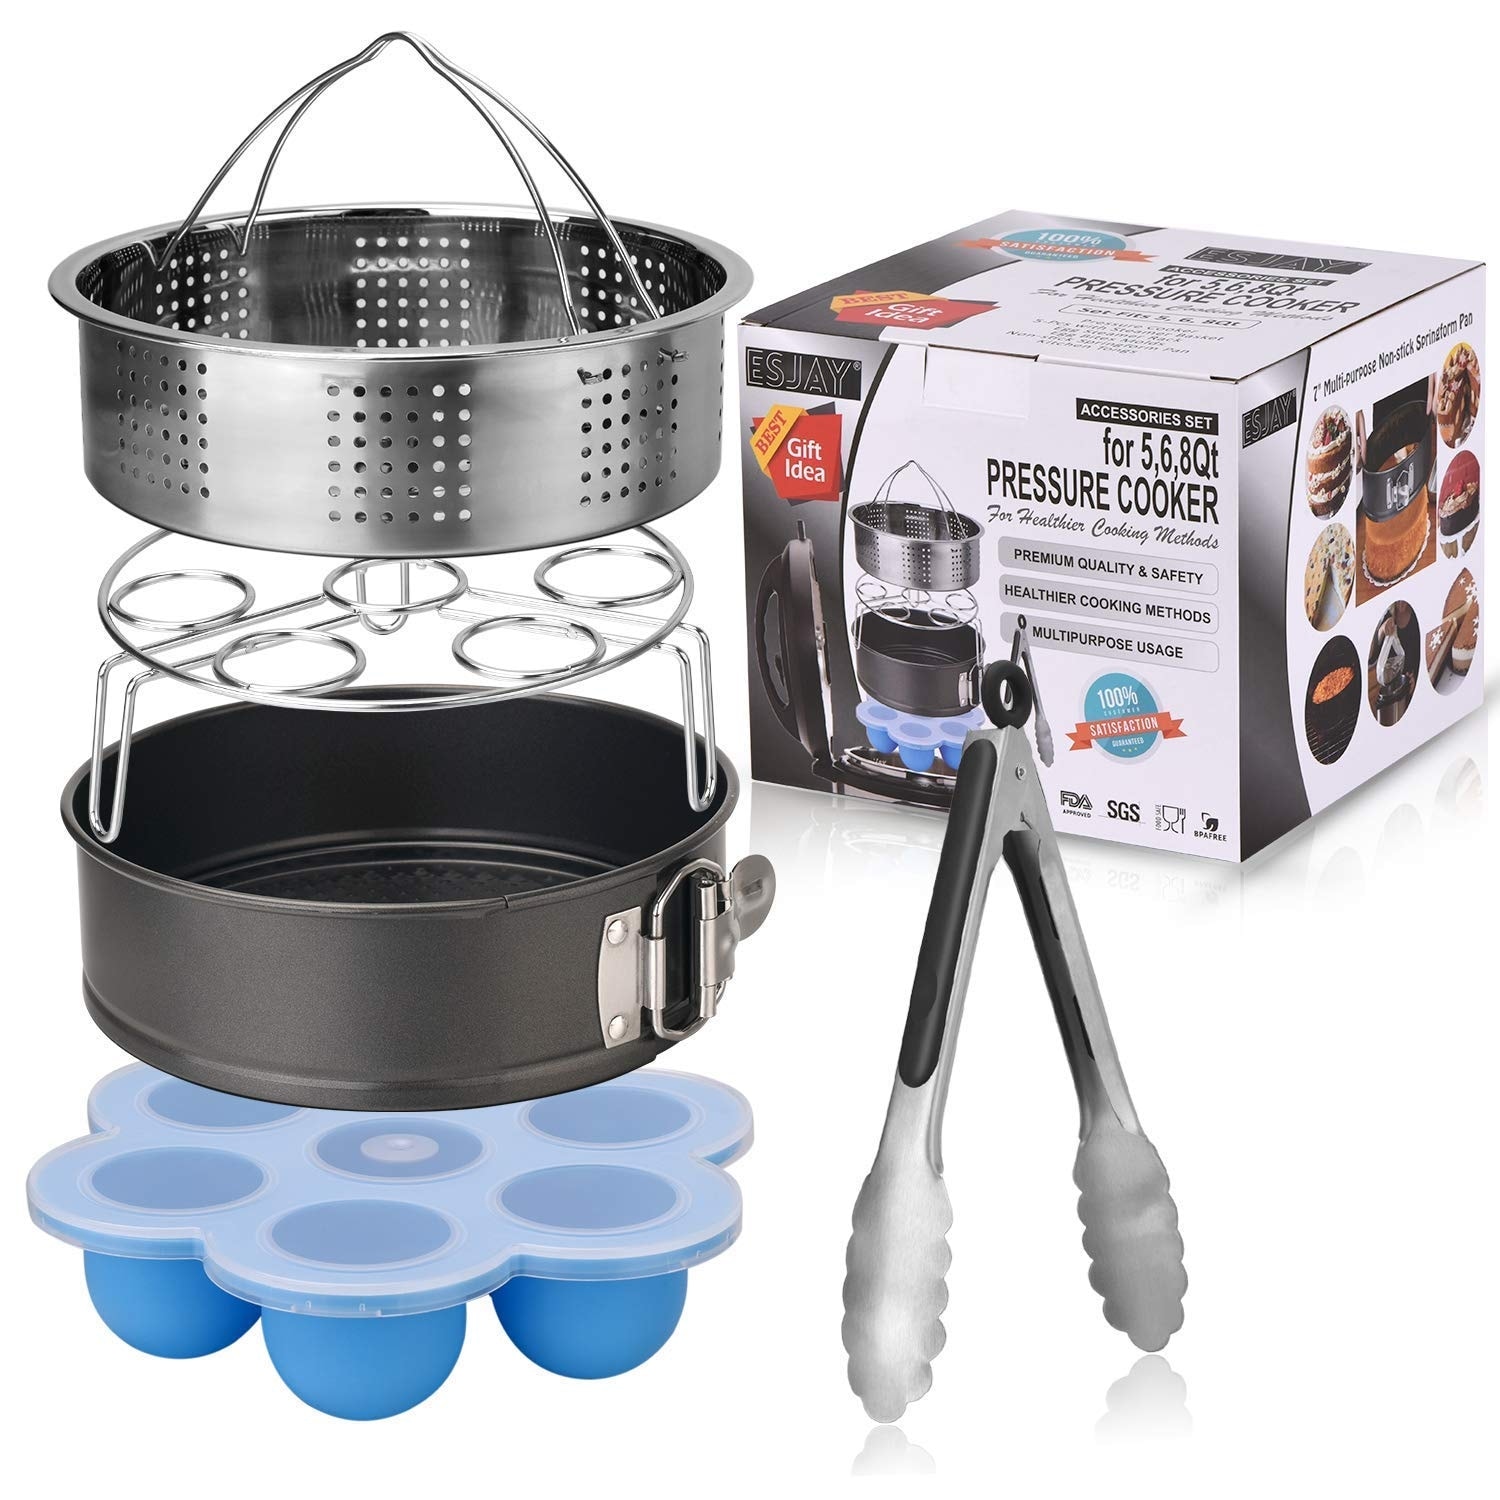 Accessories for Instant Pot,Steamer Basket,Egg Steamer Rack,Non